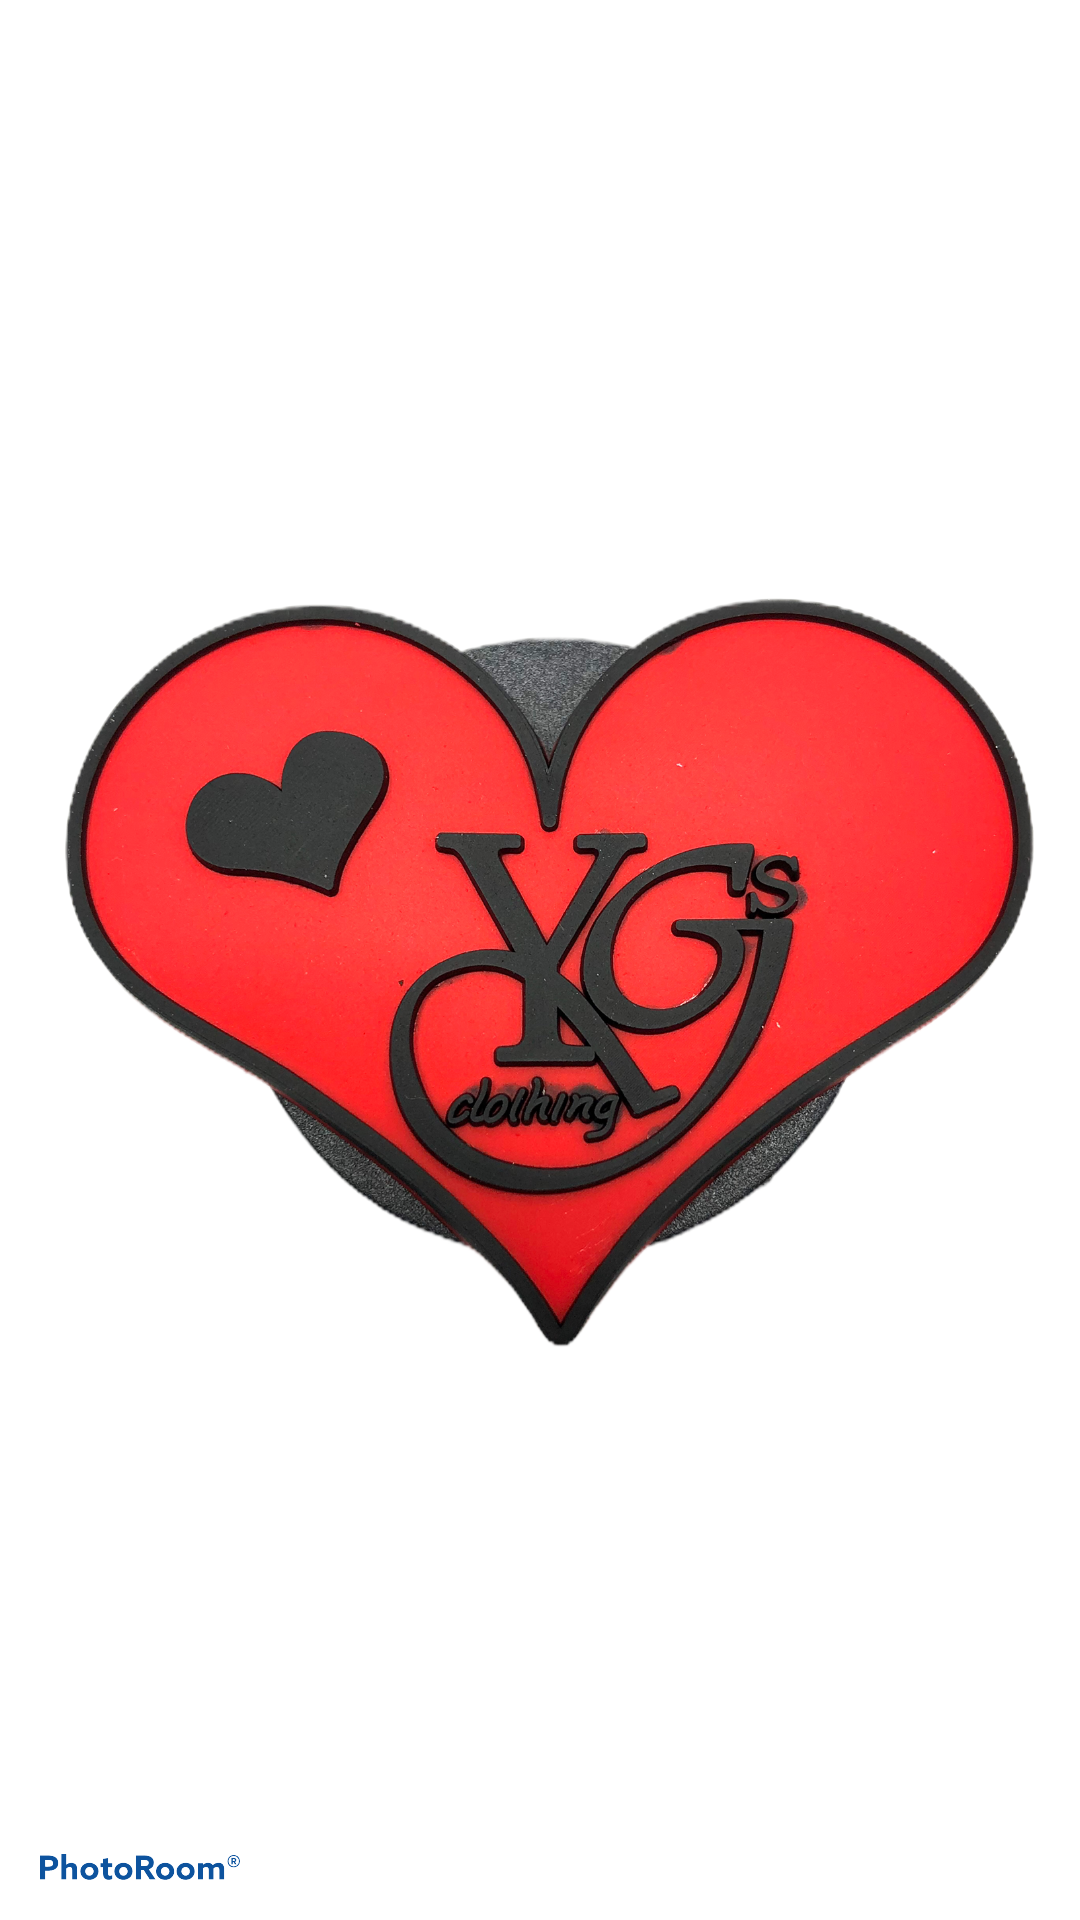 YGSC Heart Logo Phone Pop Socket